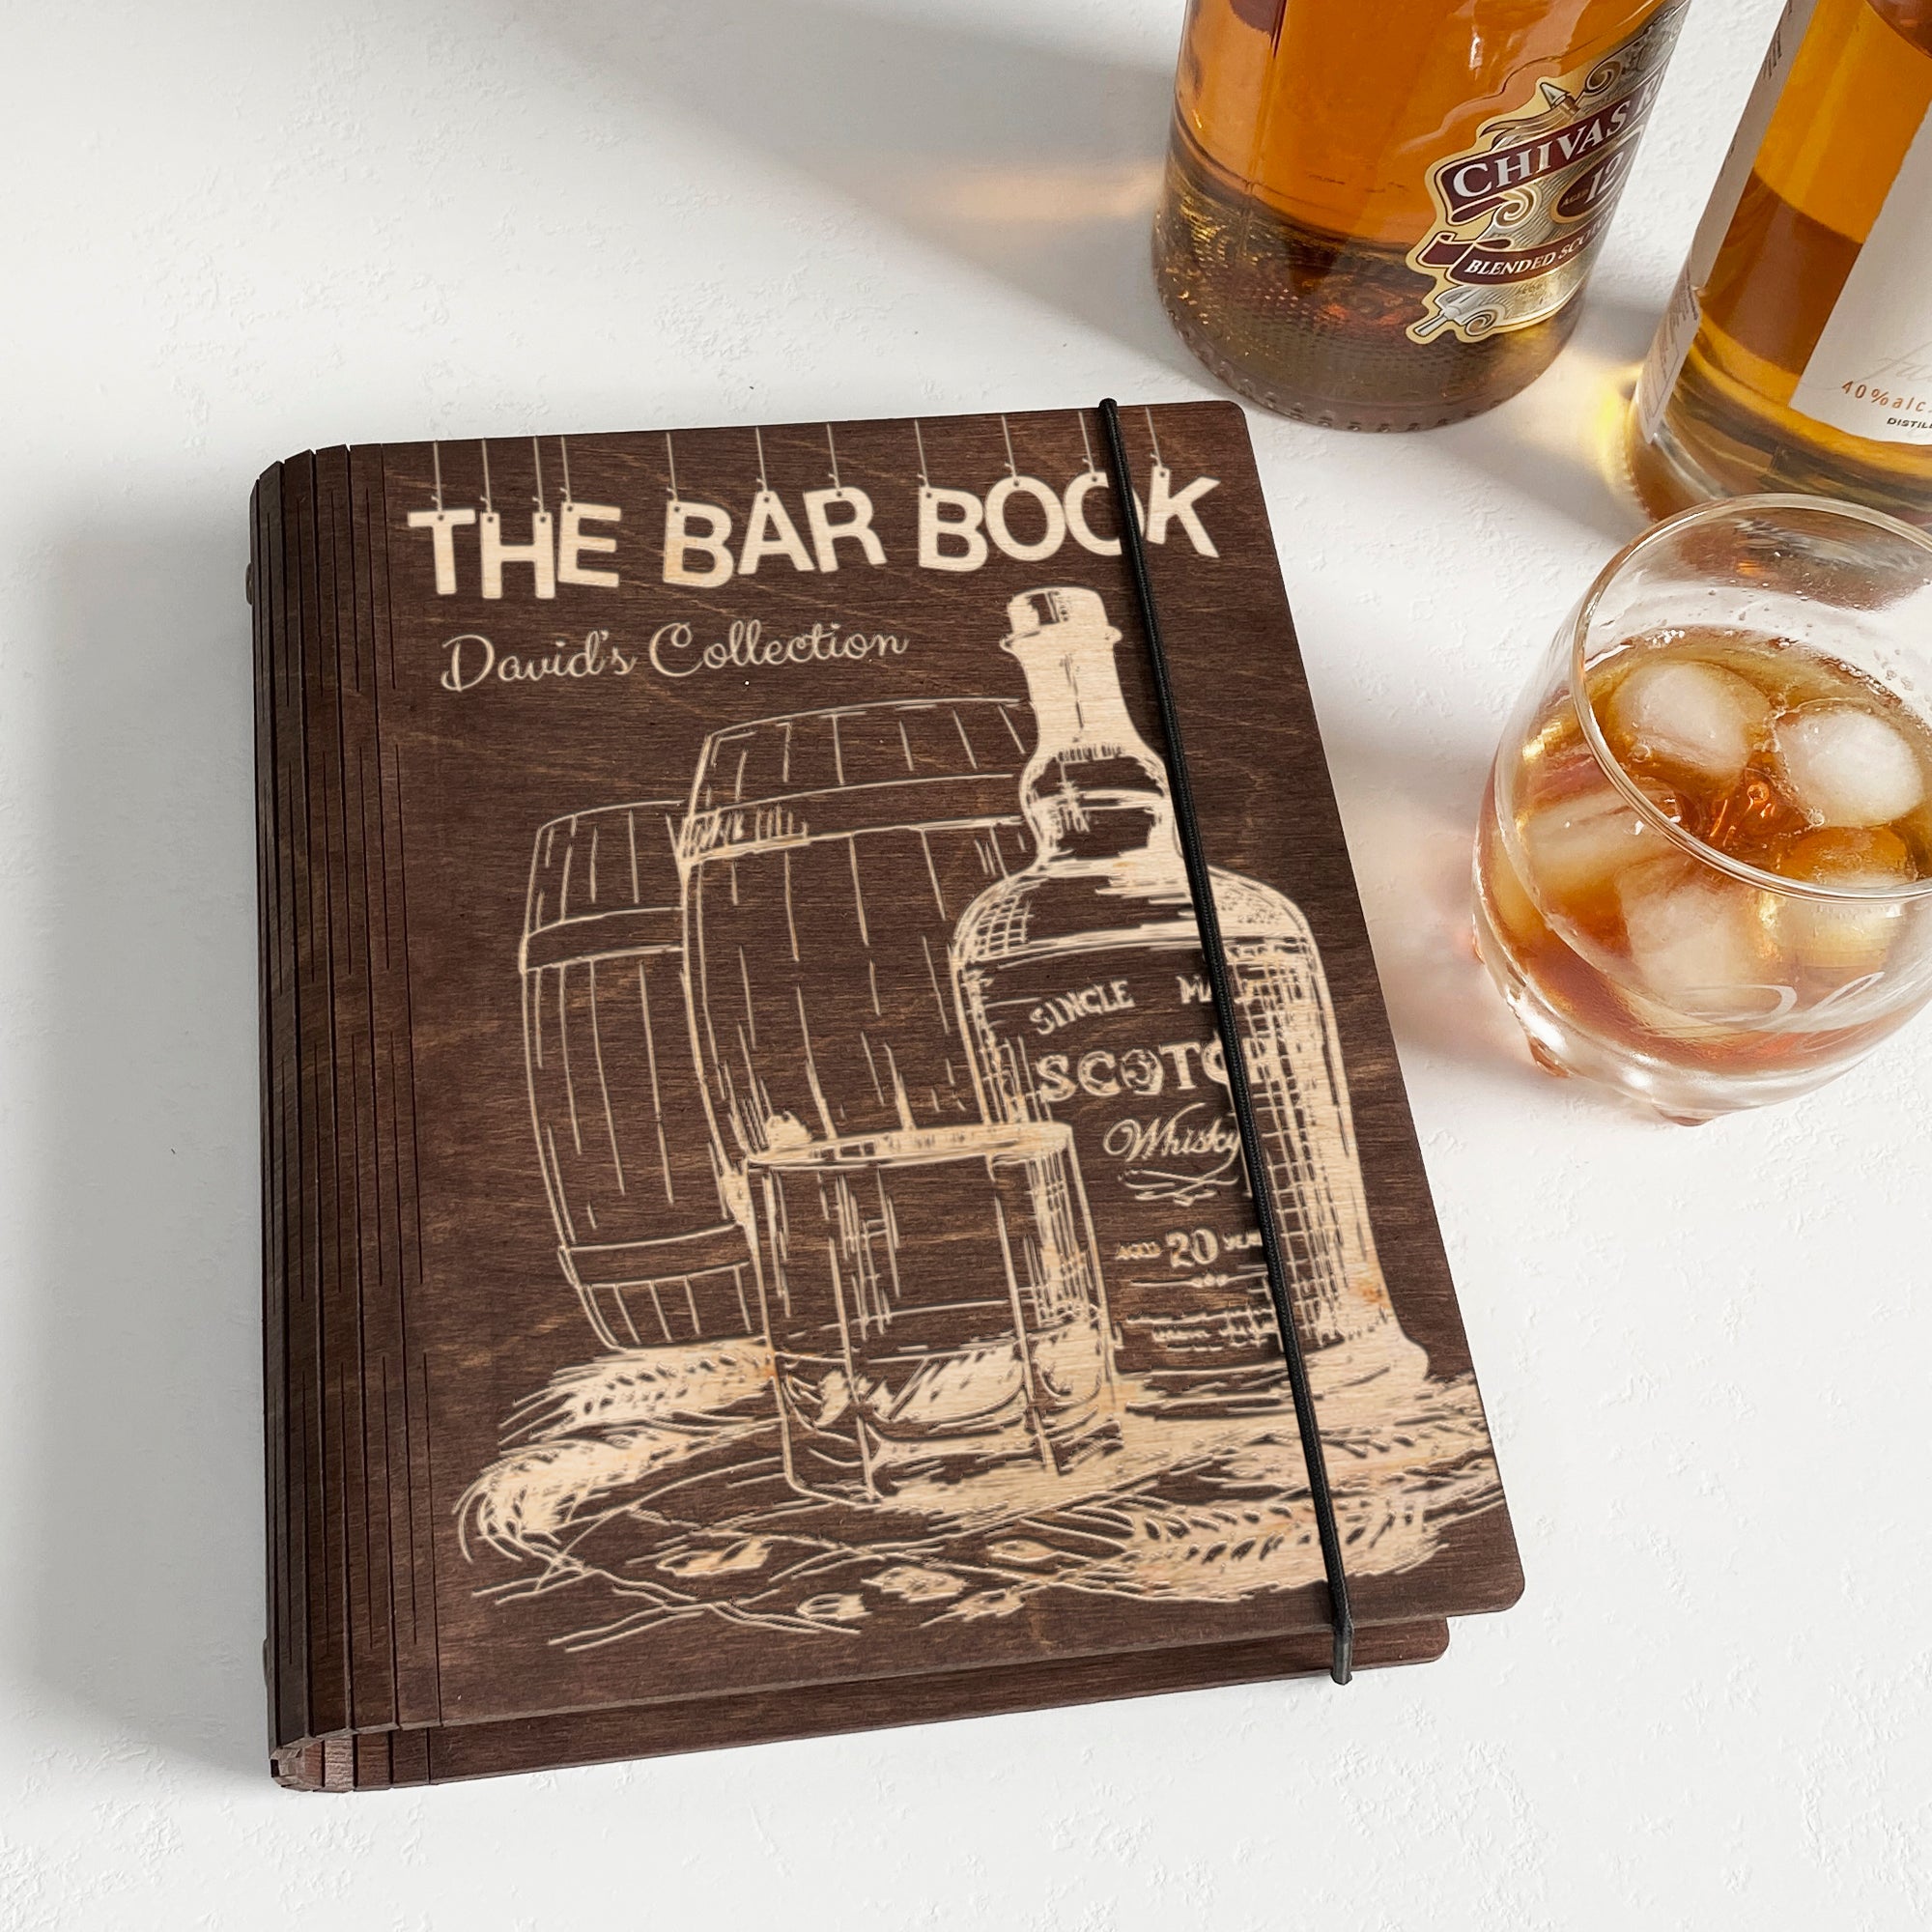 My Bar book Free custom engraving